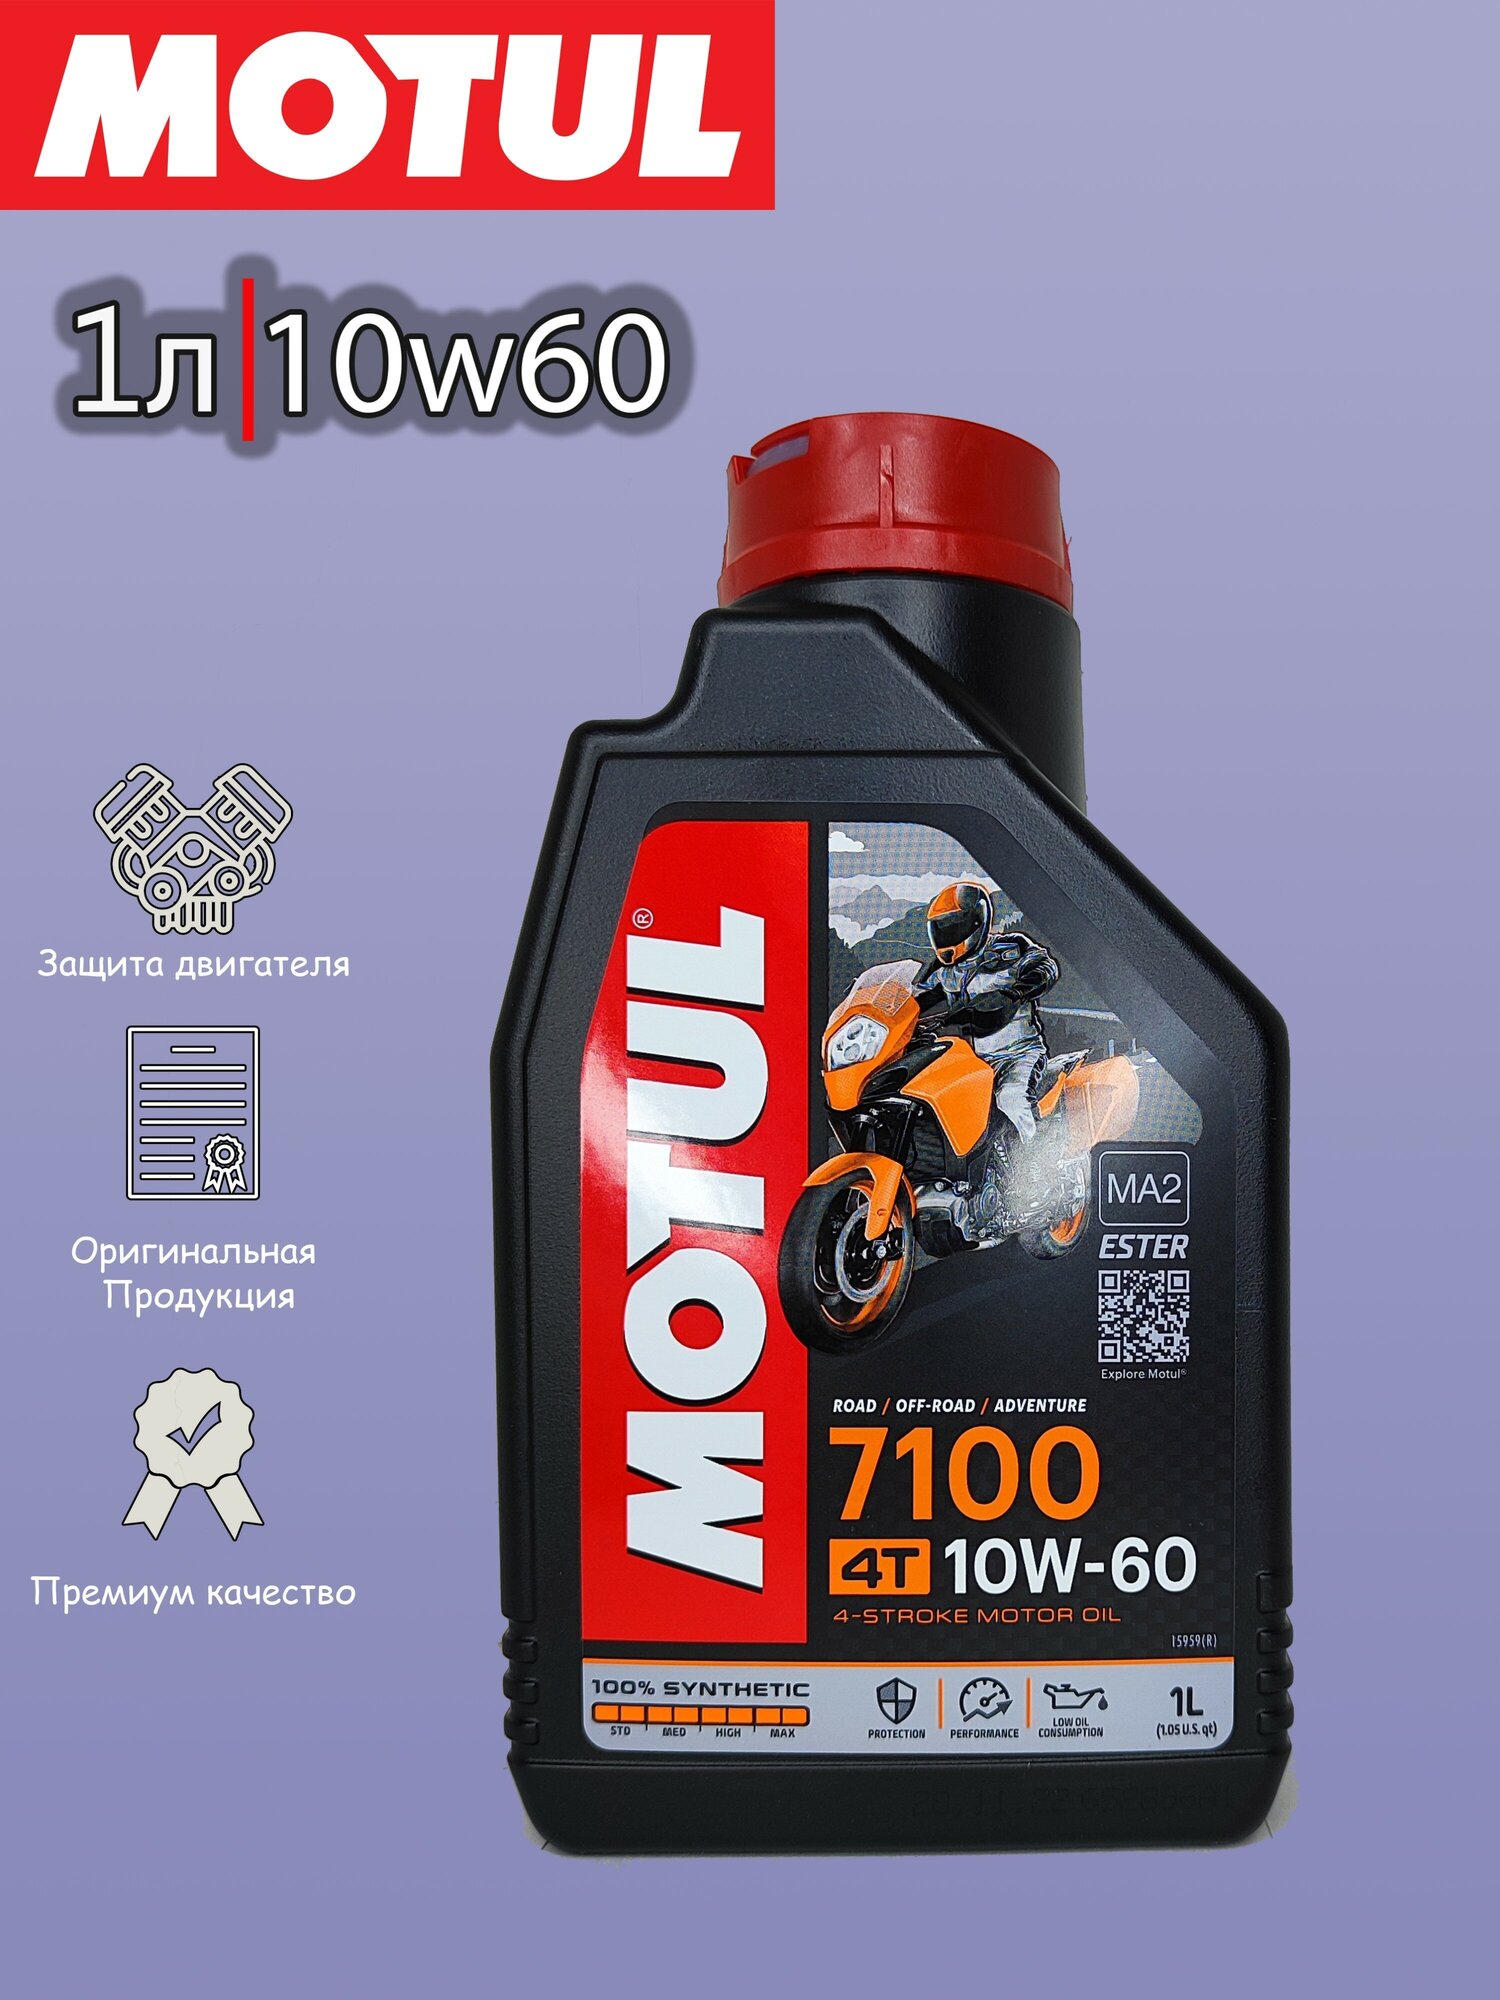 Моторное масло Motul 7100 4T 10W-60 (1л)